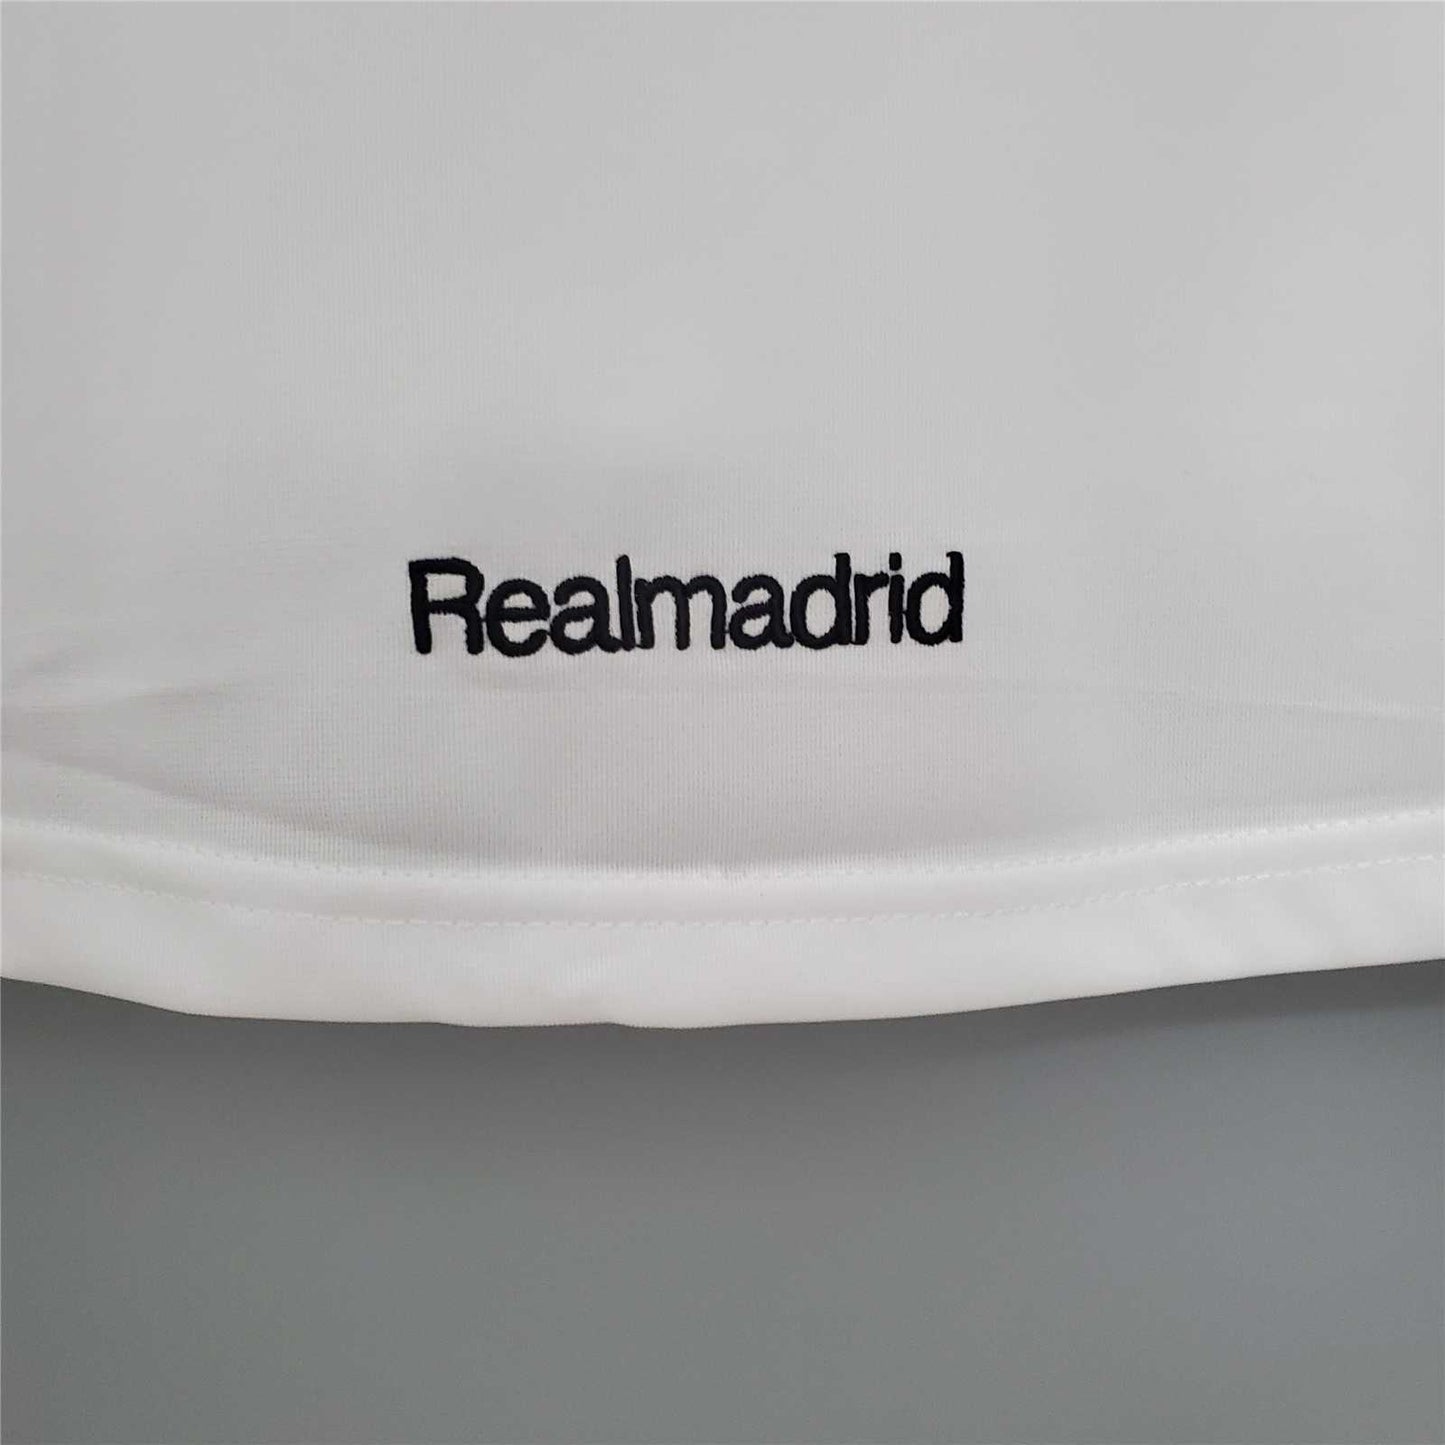 Real Madrid 05-06 Home Shirt